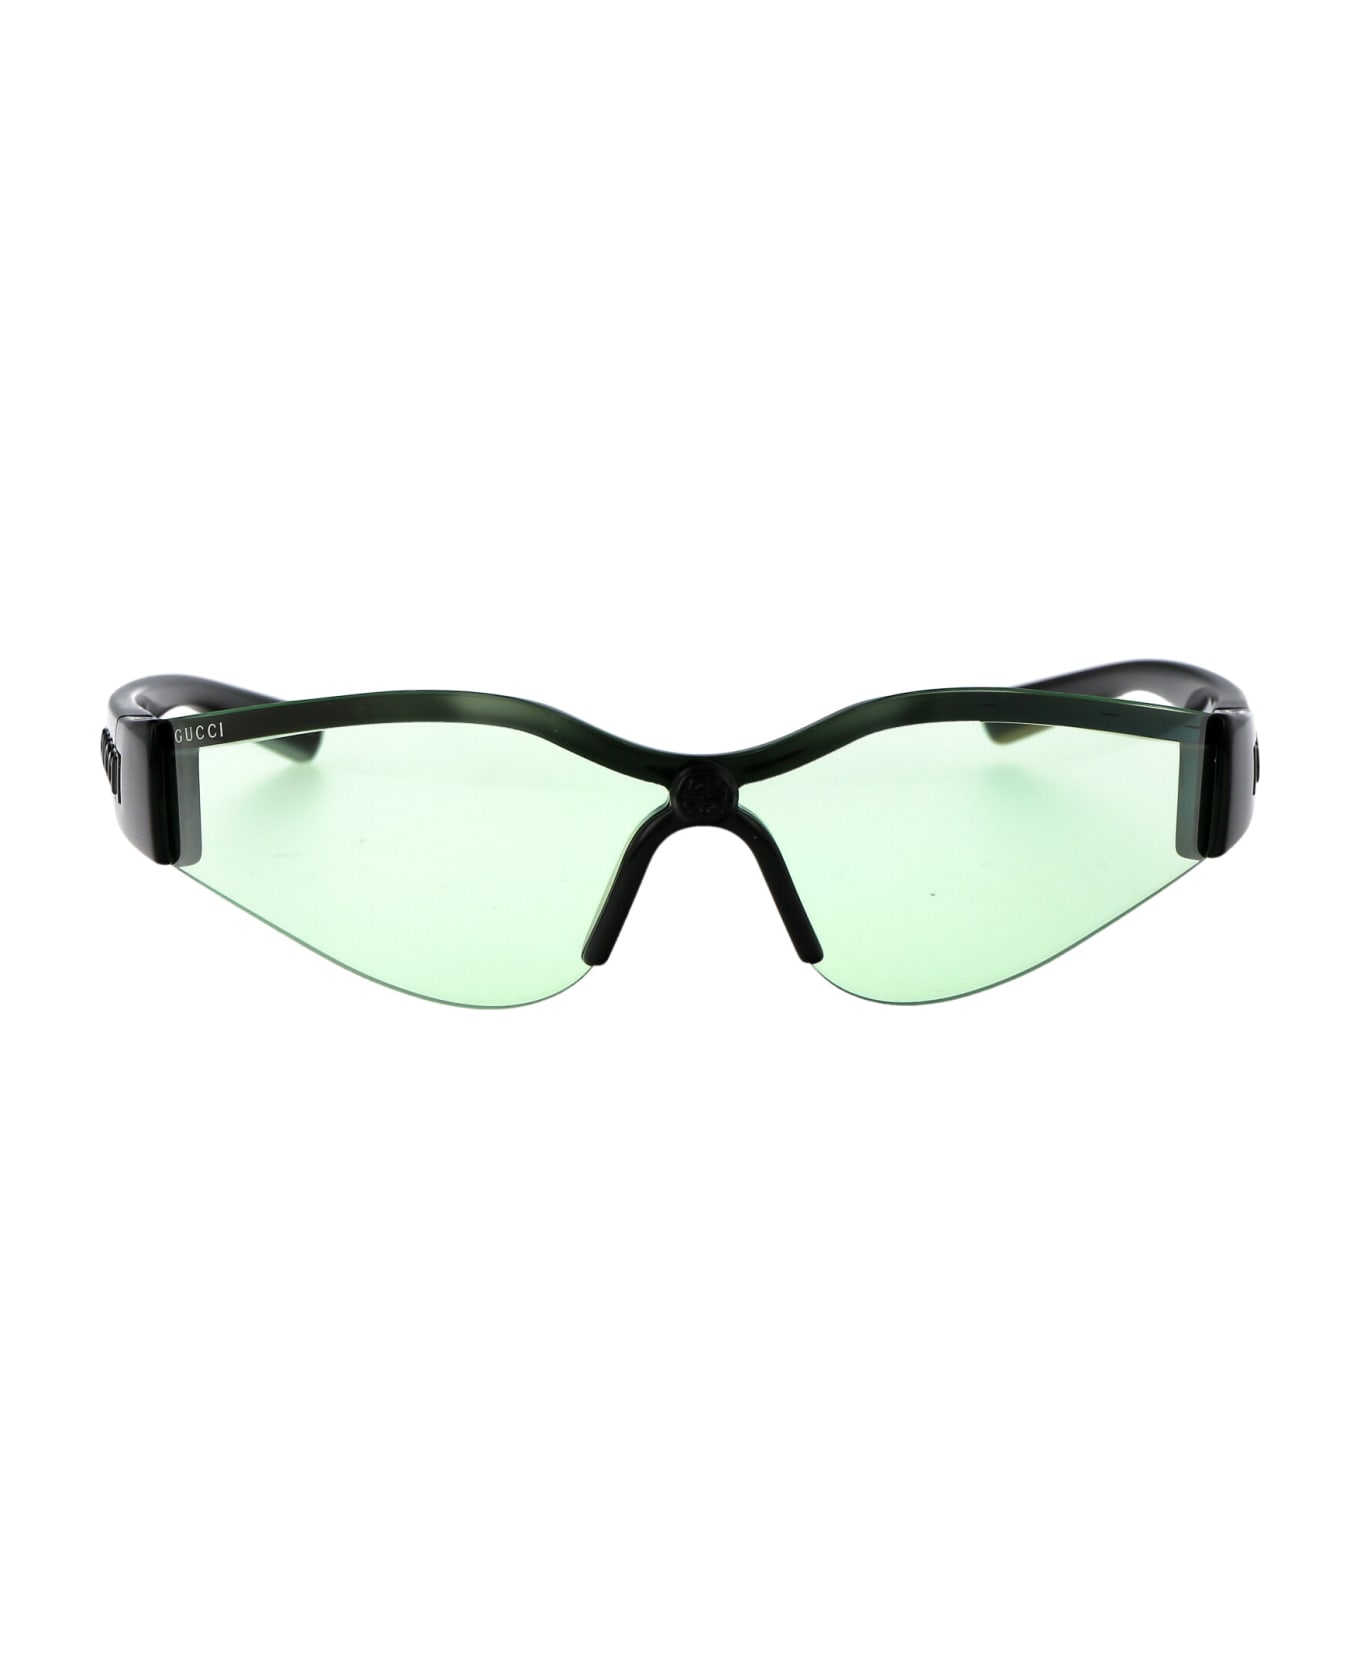 Gucci Eyewear Gg1651s Sunglasses - 005 BLACK BLACK GREEN